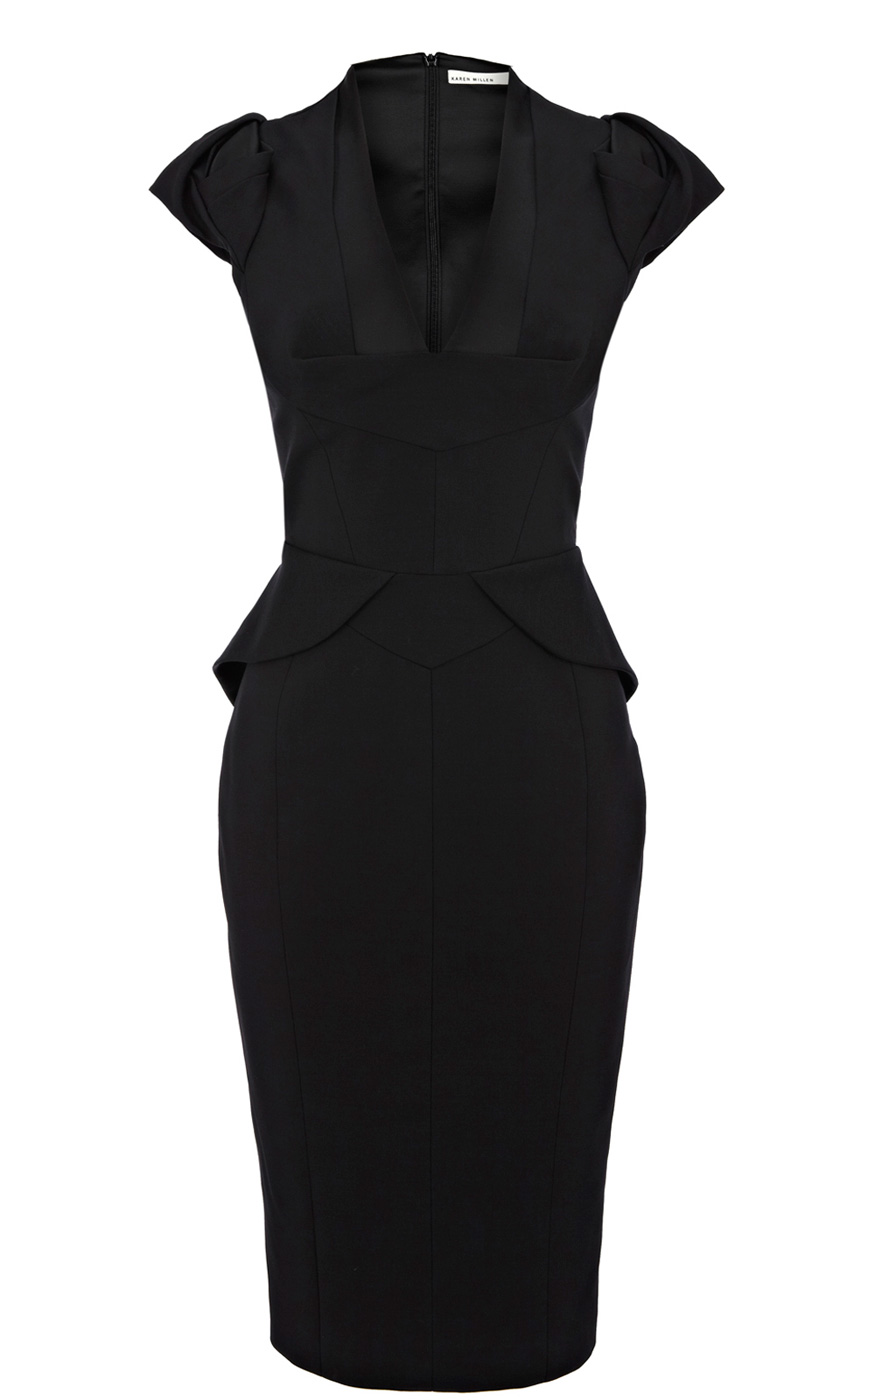 Black Peplum Dress Picture Collection | DressedUpGirl.com